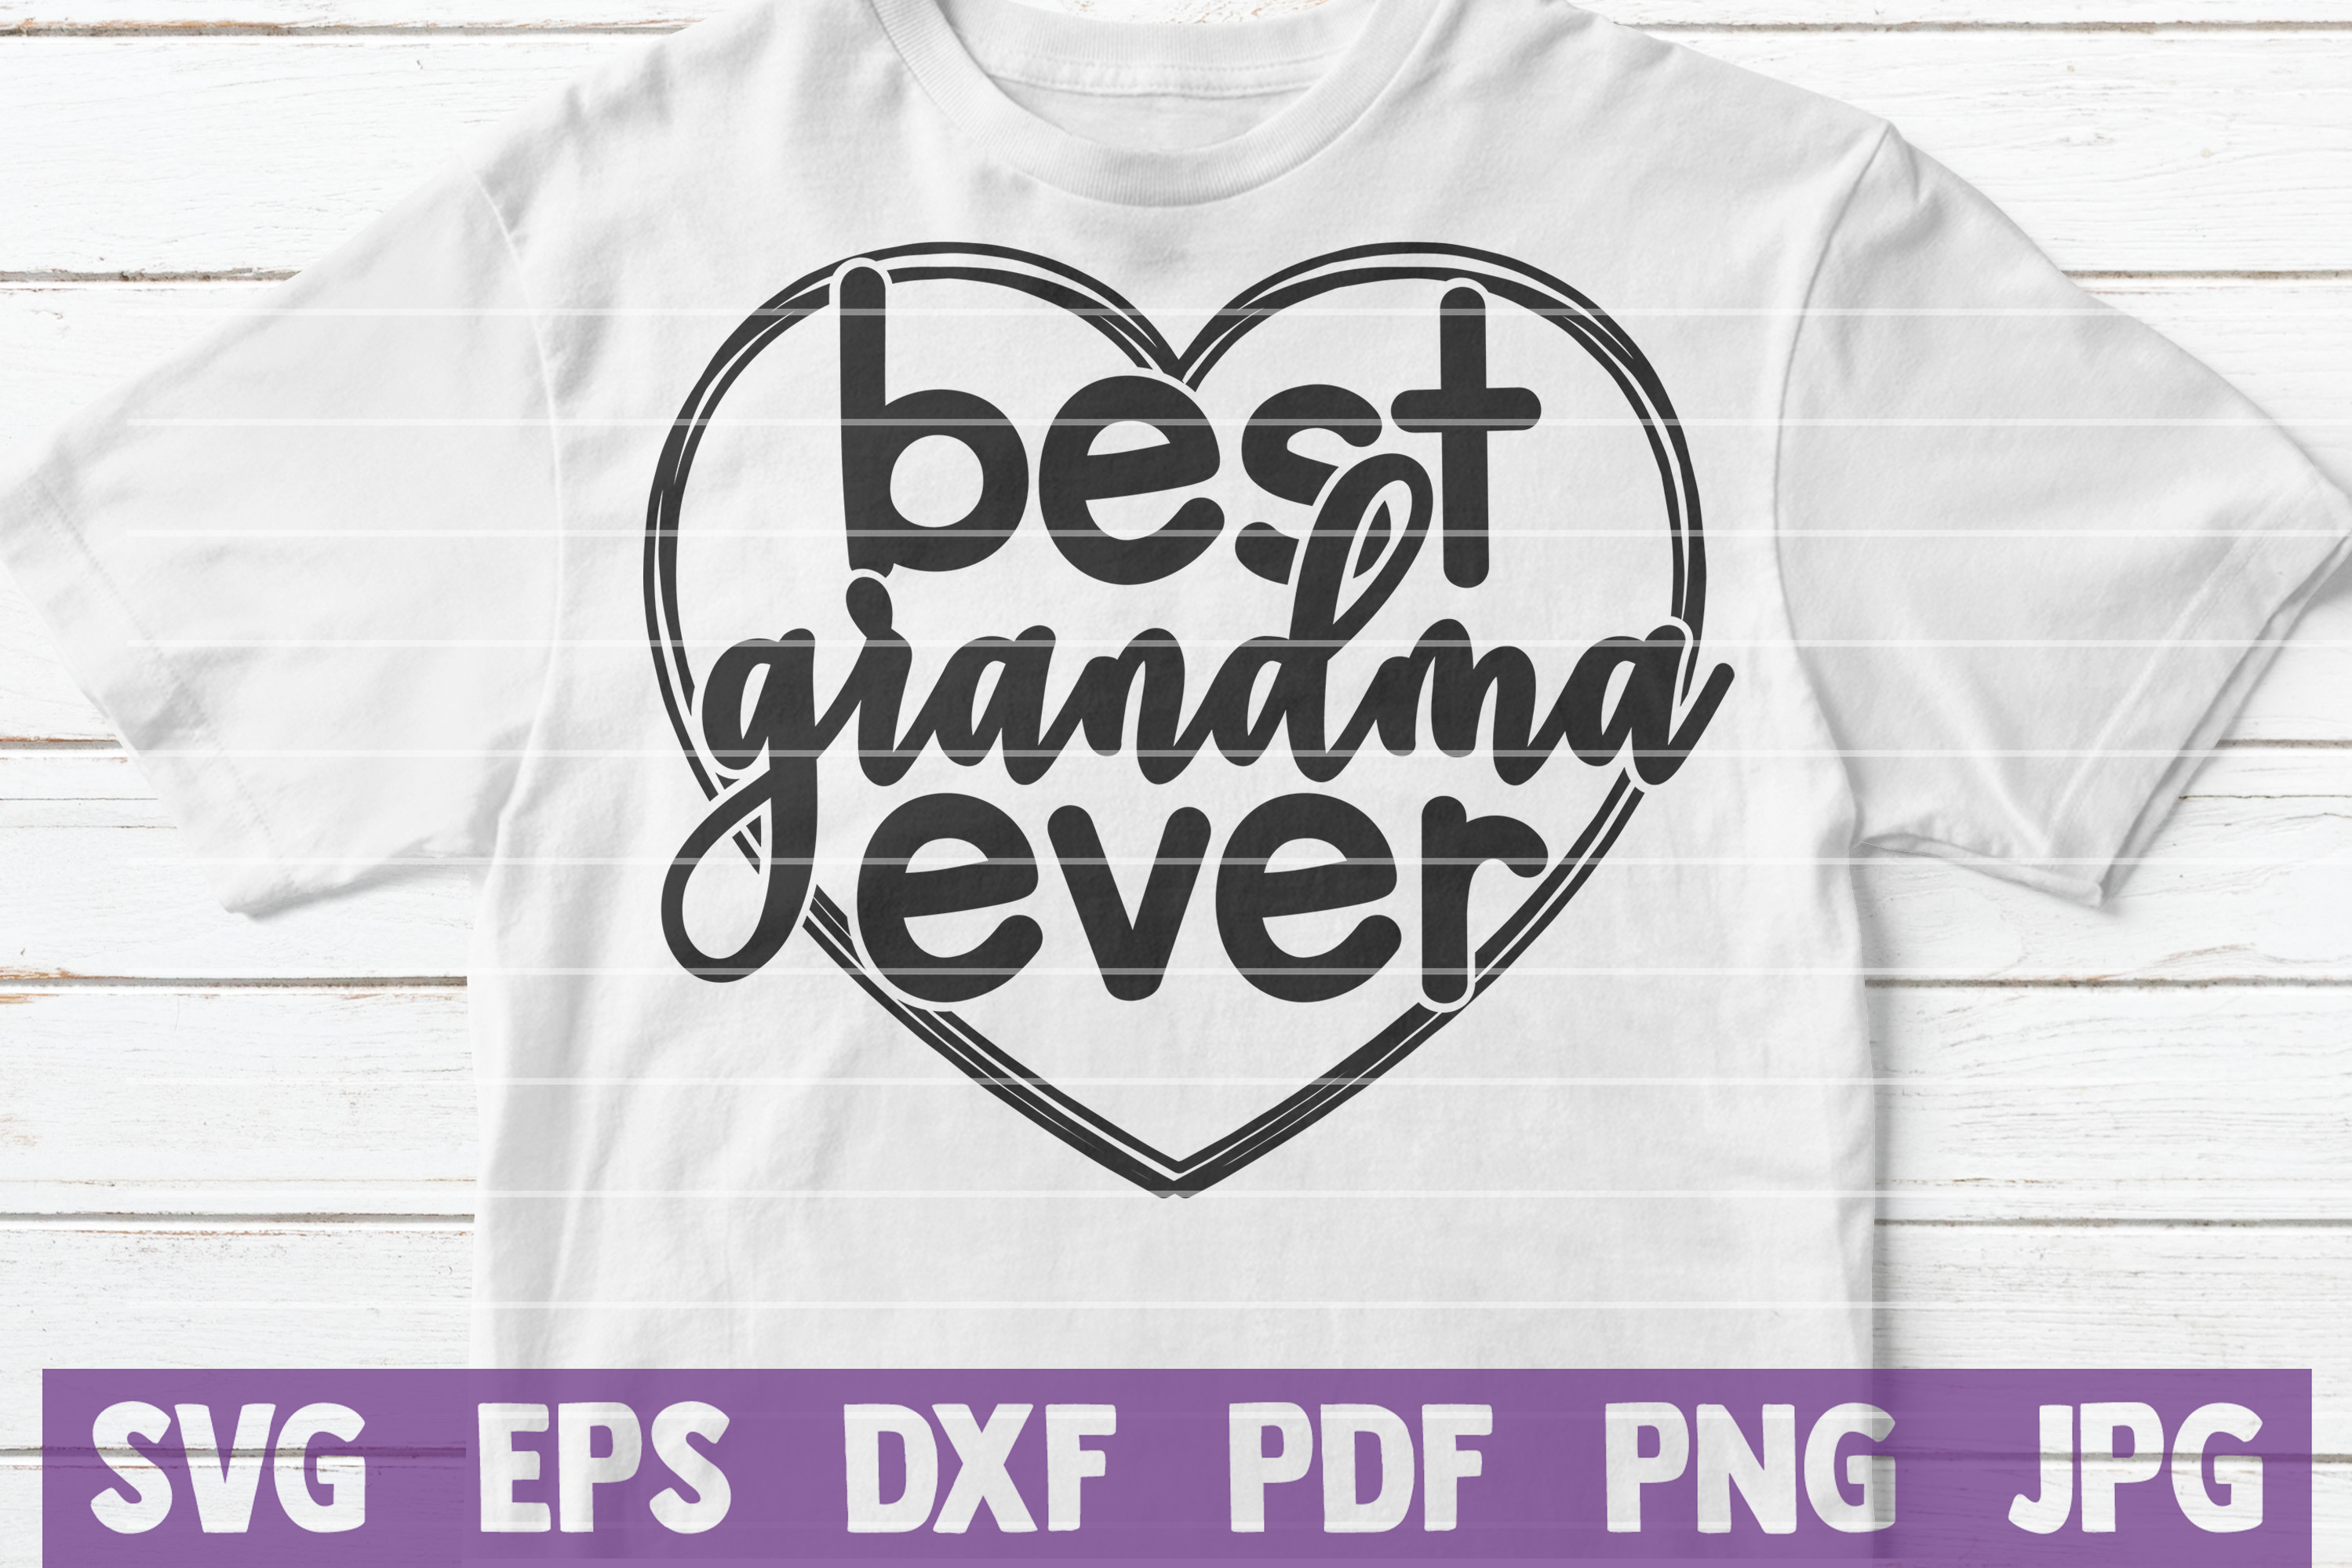 Download Best Grandma Ever SVG Cut File (217894) | Cut Files ...